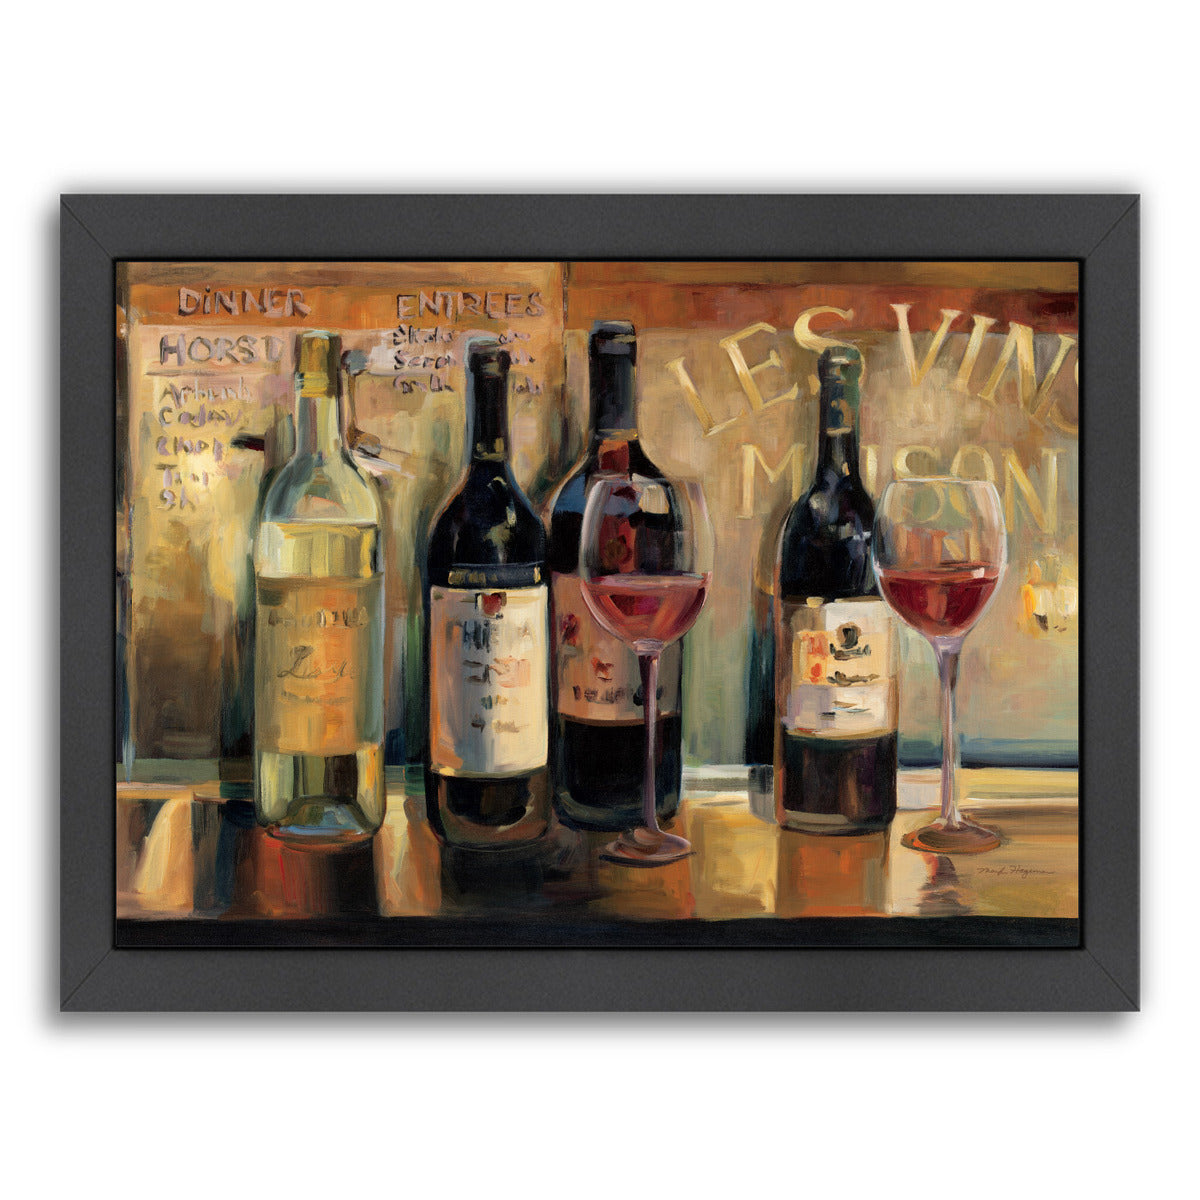 Les Vins Maison Crop by Wild Apple Framed Print - Americanflat